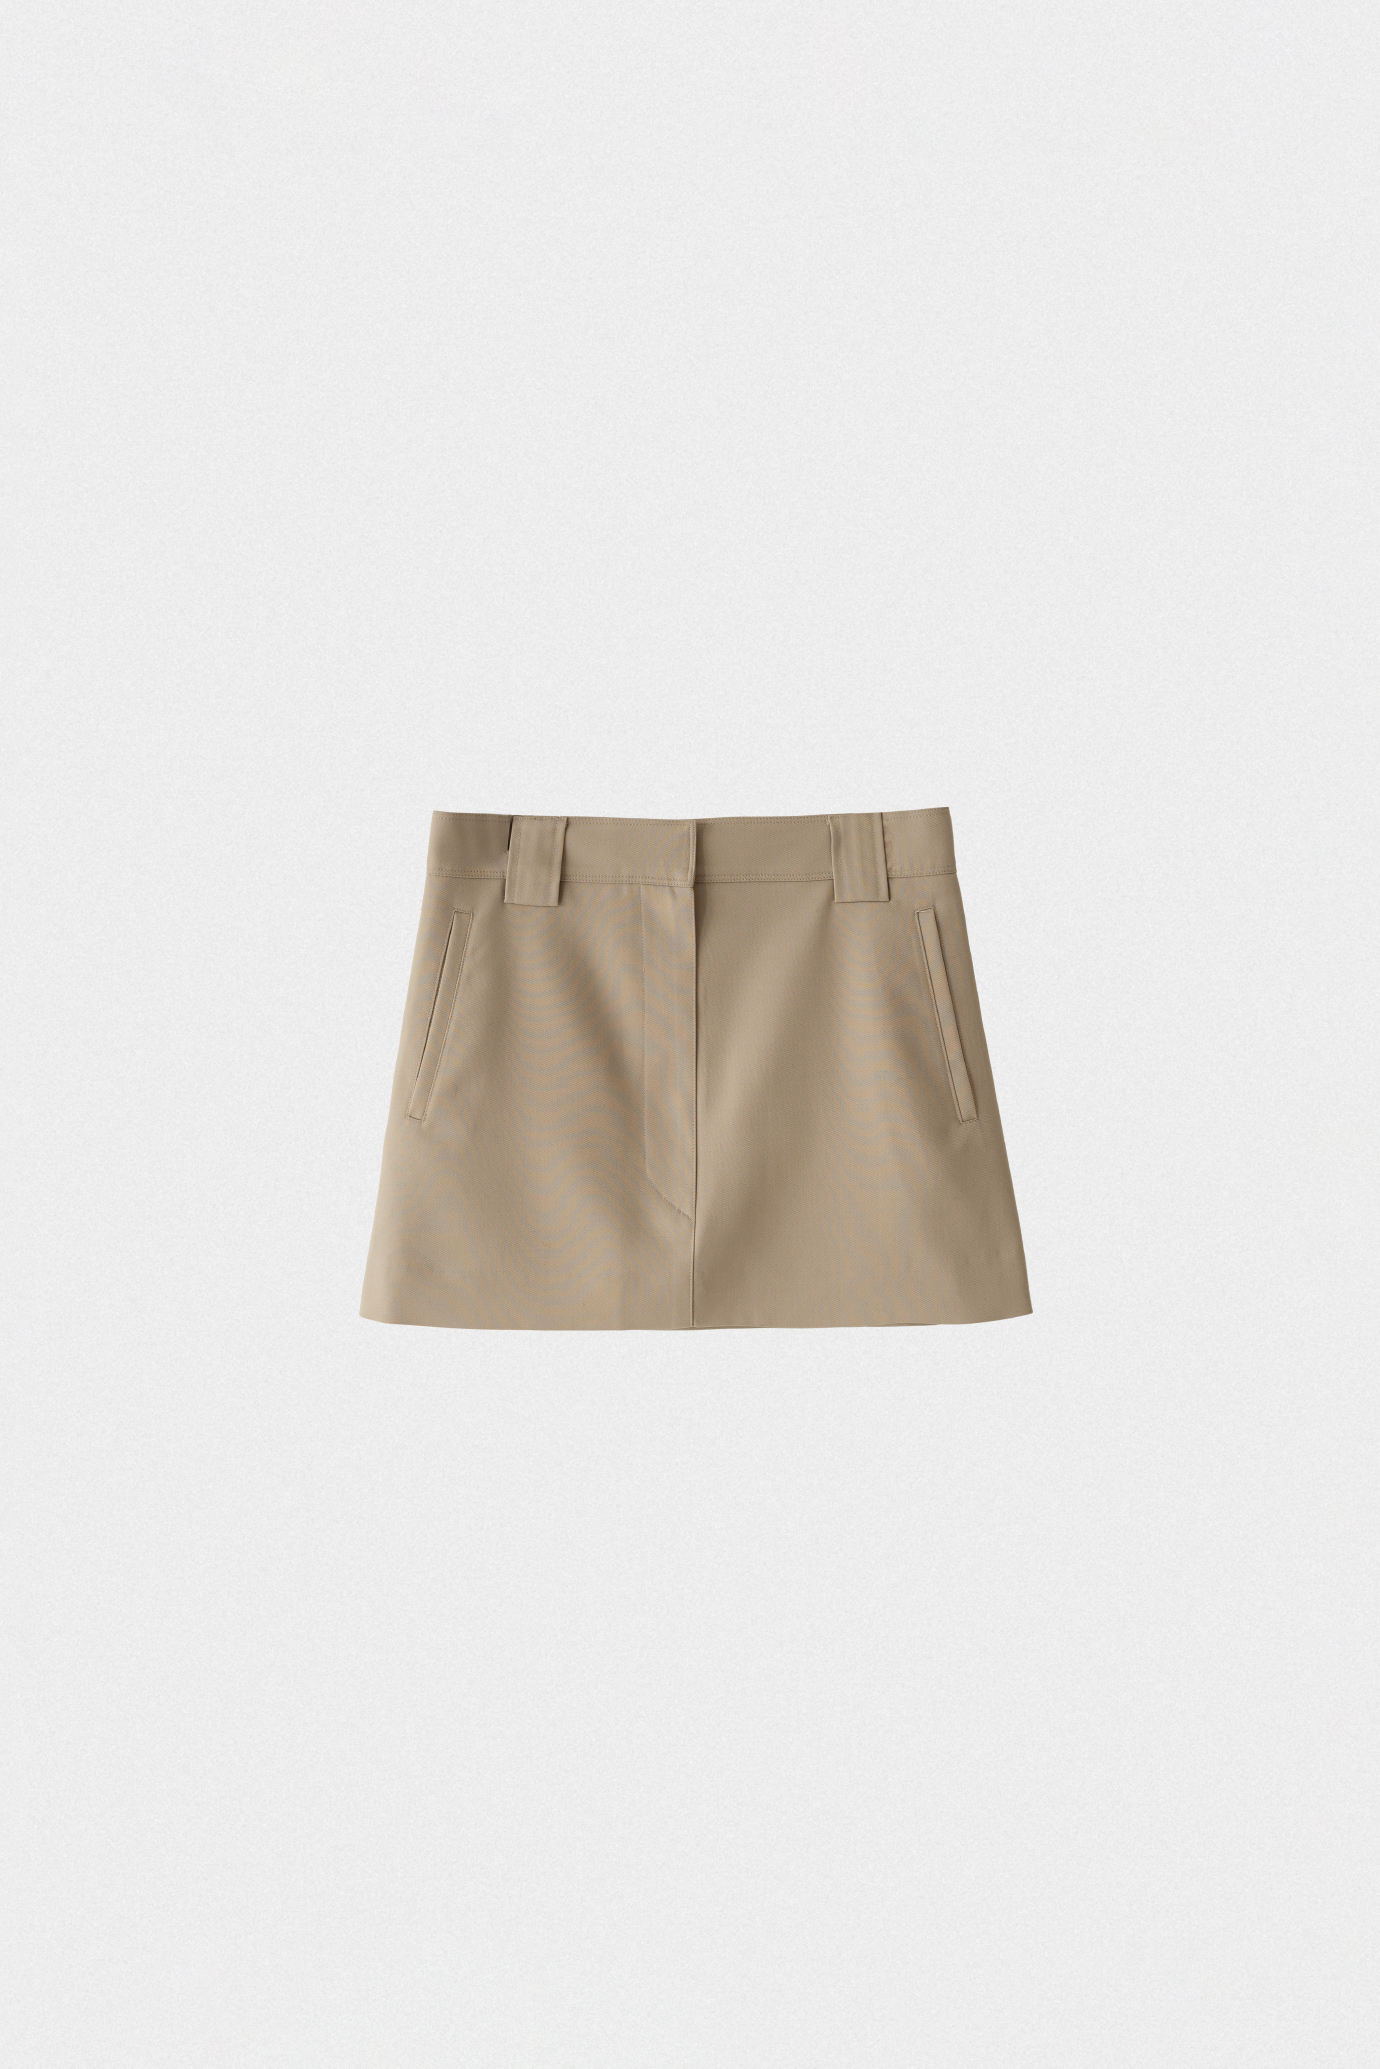 19646_Low Wool Miniskirt